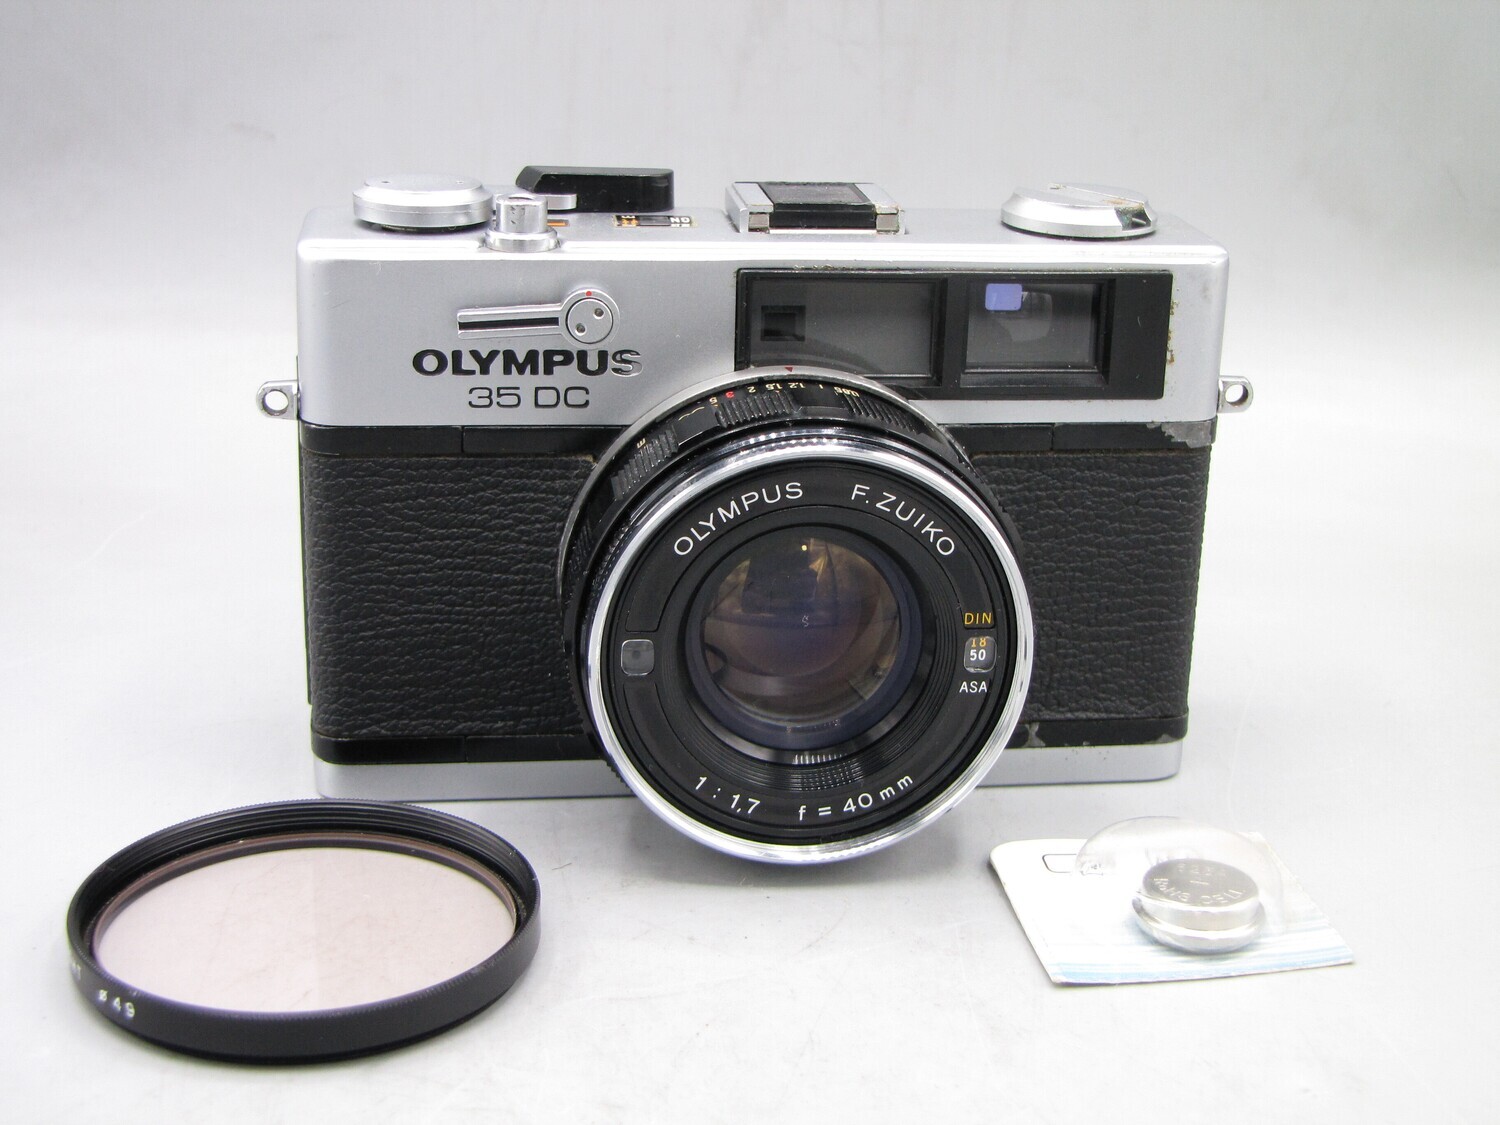 Olympus 35 DC 35mm Rangefinder Film Camera Clad Seals